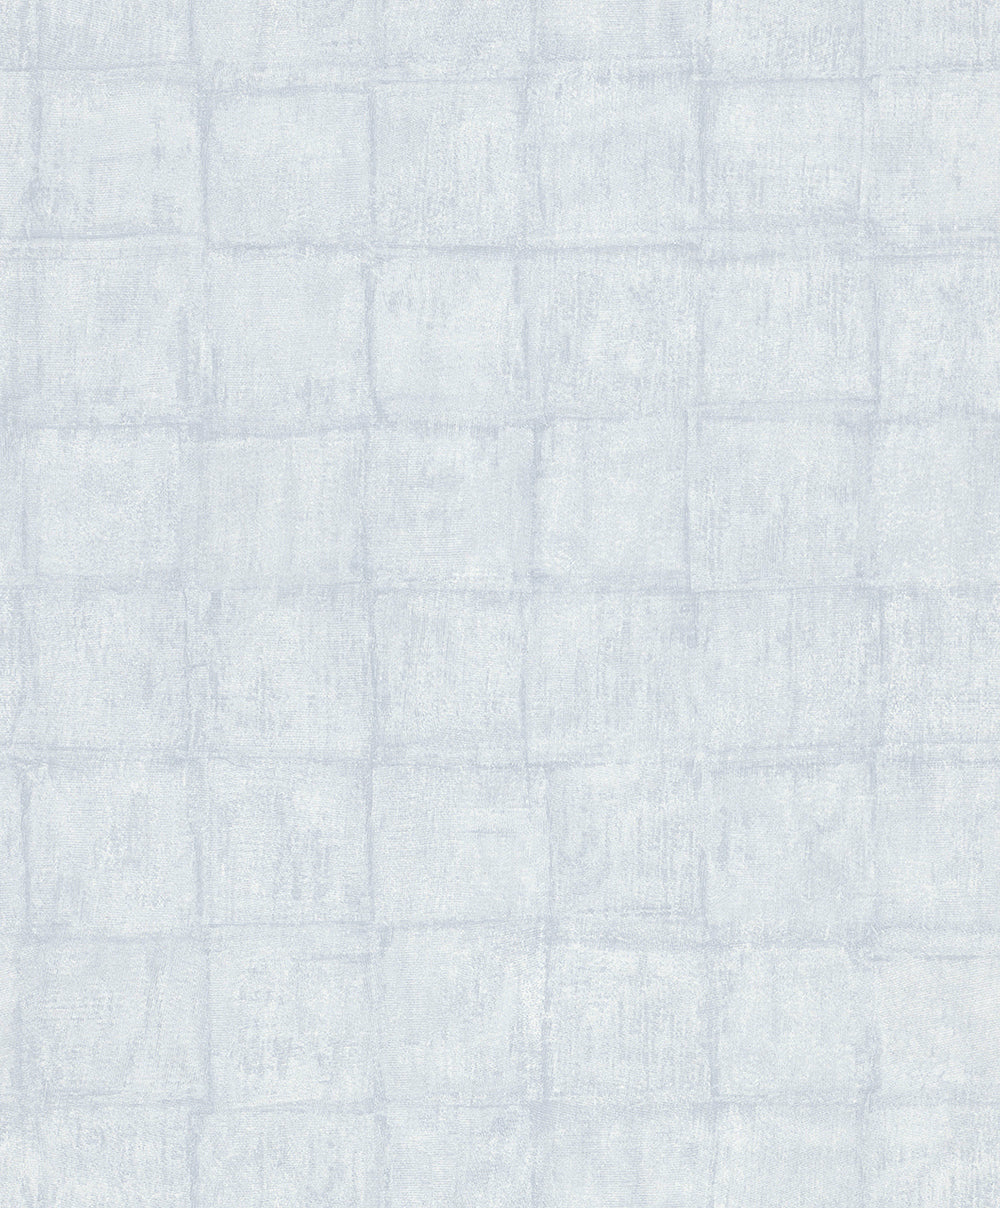 Botanica - Textured Tile industrial wallpaper Marburg Roll Blue  33969 